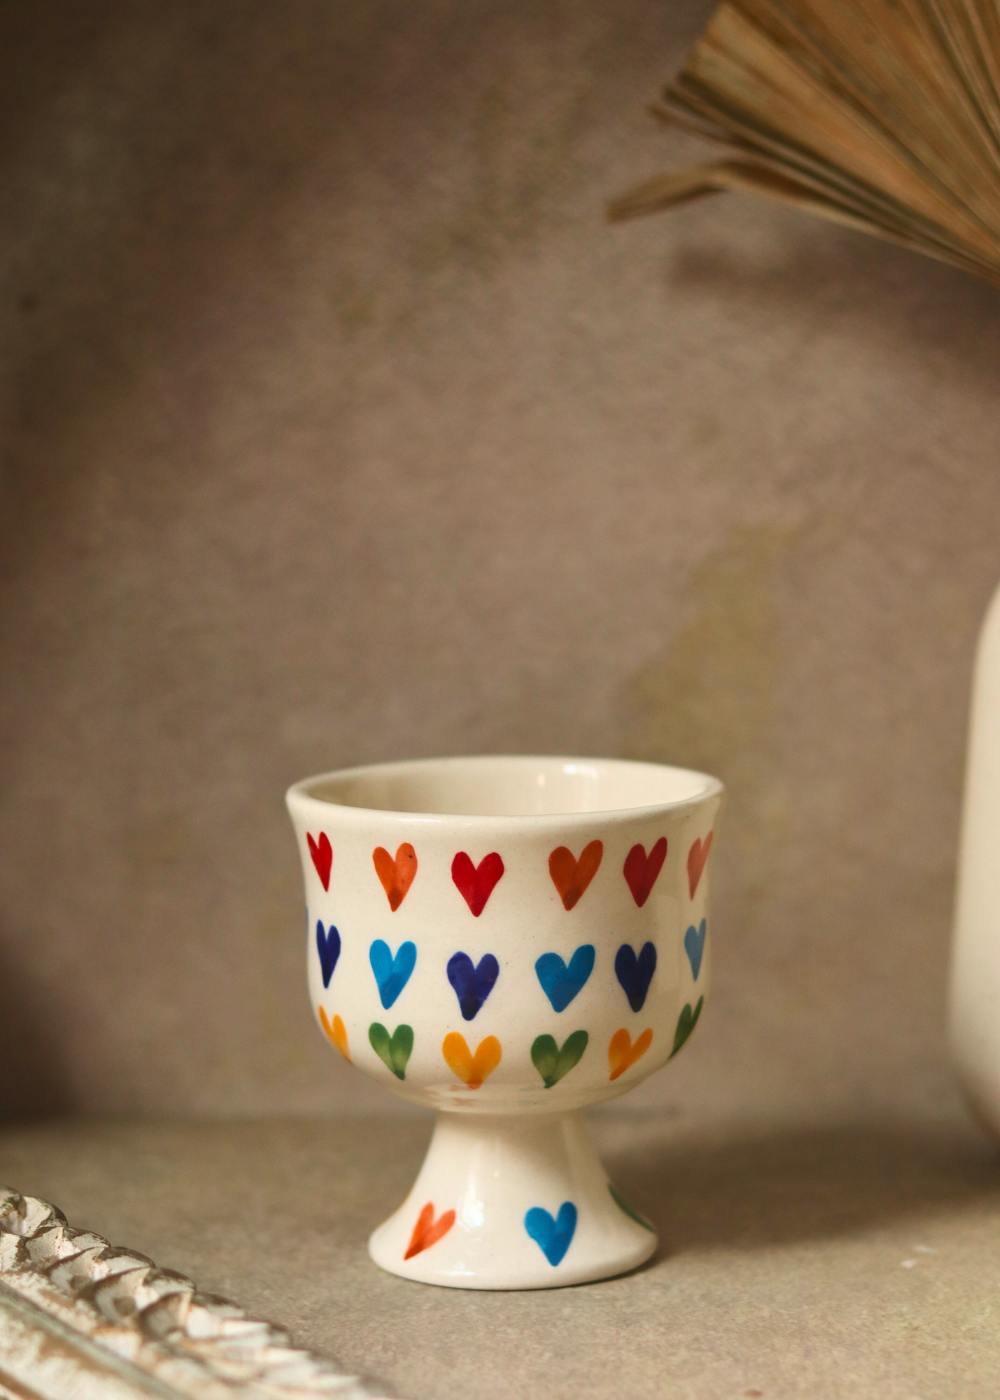 loveislove goblet made from ceramic material